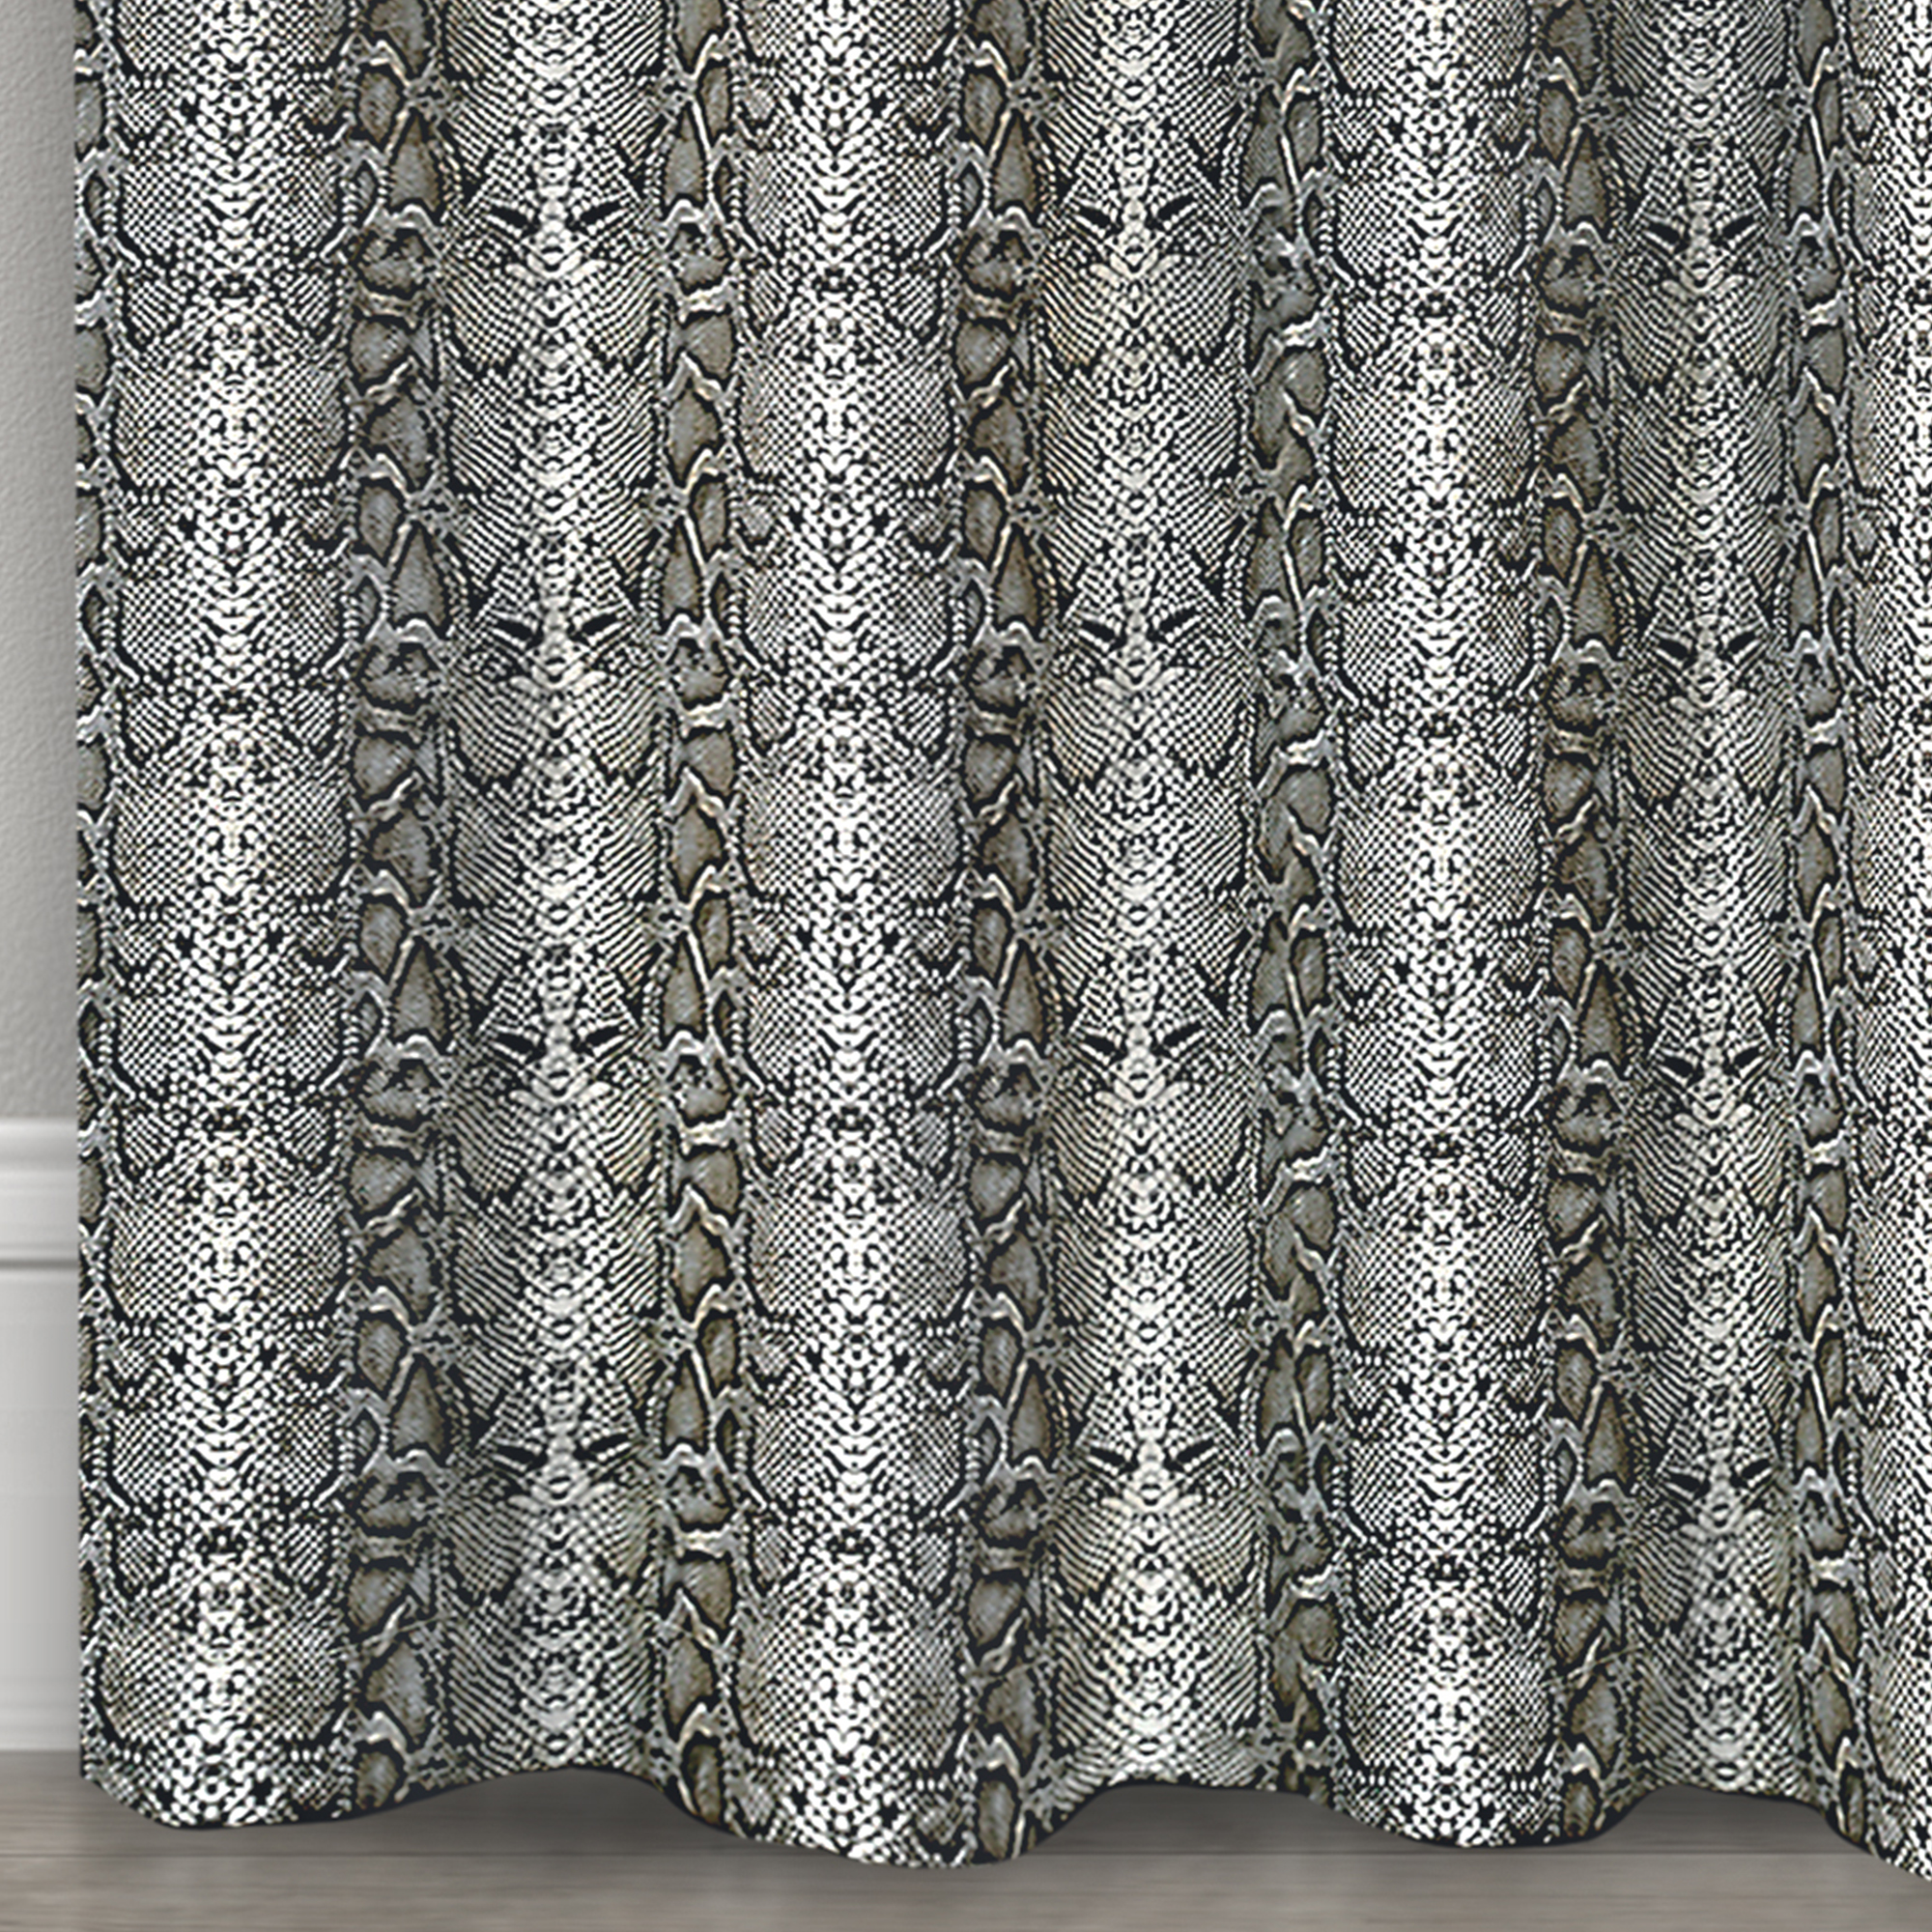 Achim Python Polyester Blackout Window Curtain Panel, Black/Silver, 52" x 63" - image 5 of 5